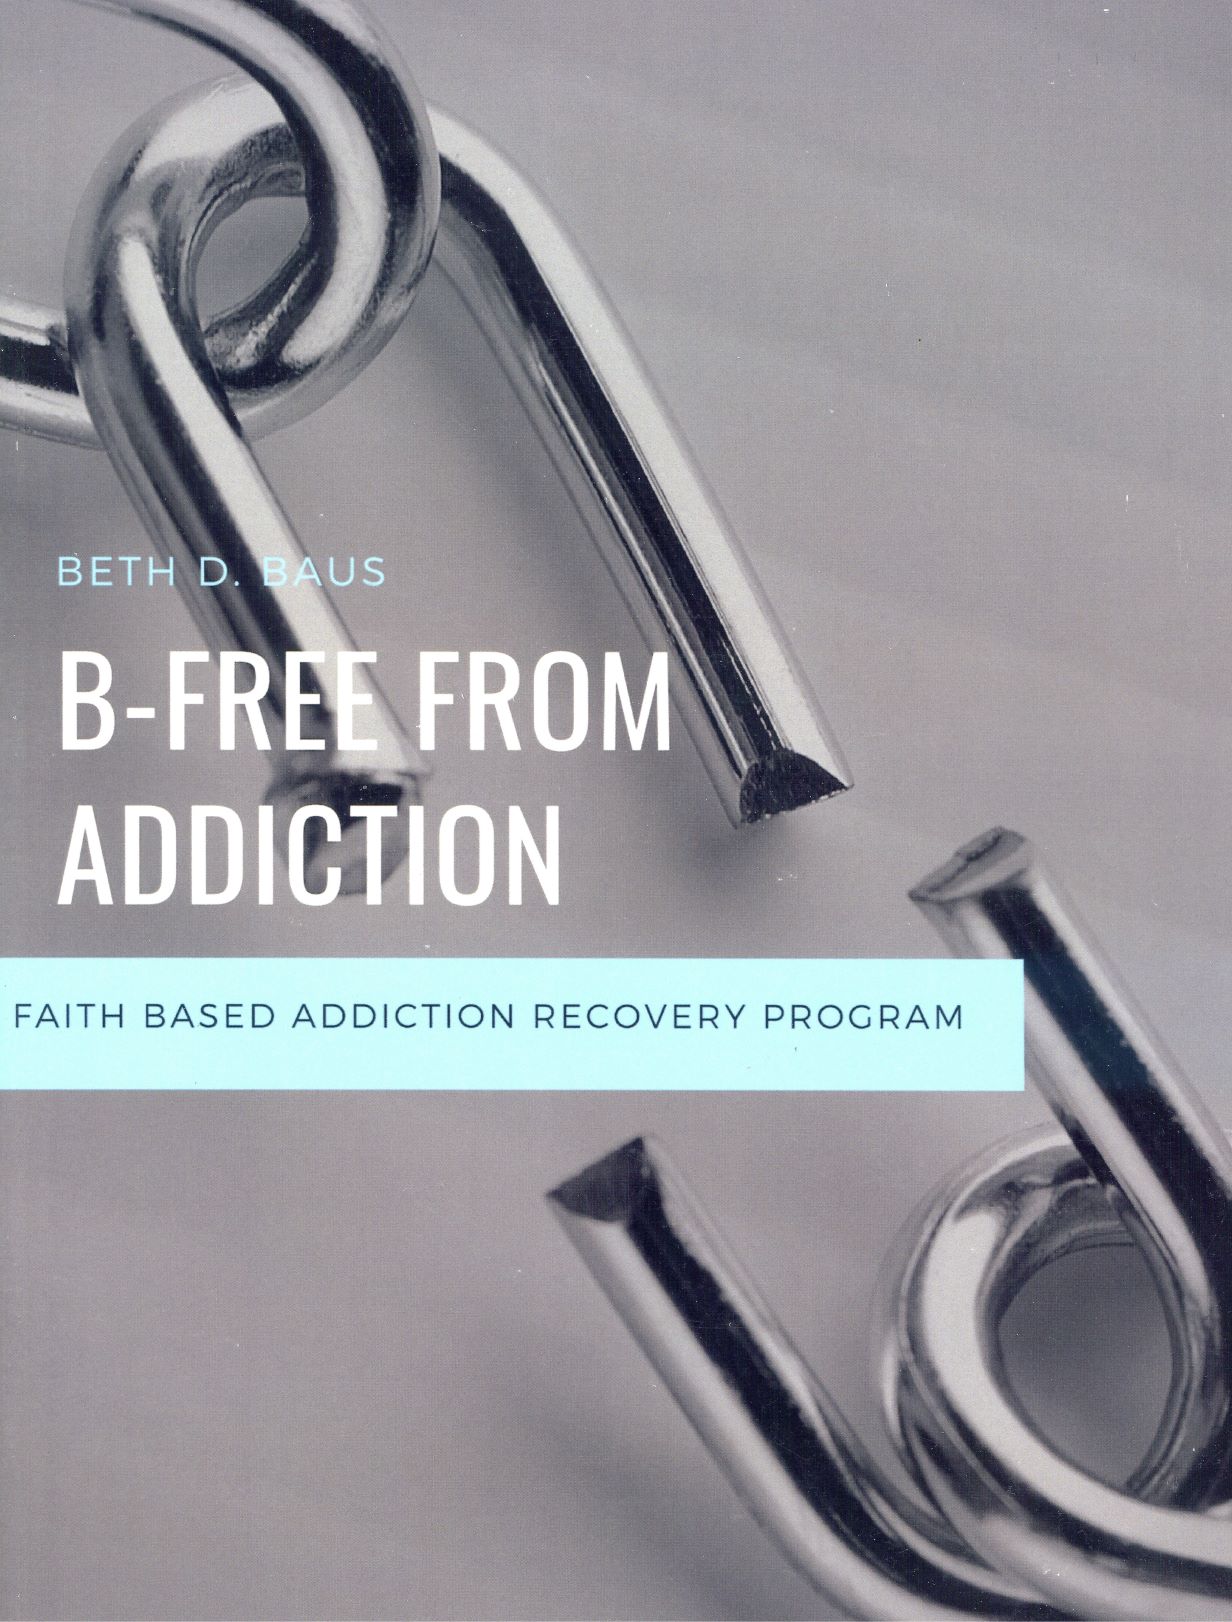 B-Free From Addiction - Beth Baus